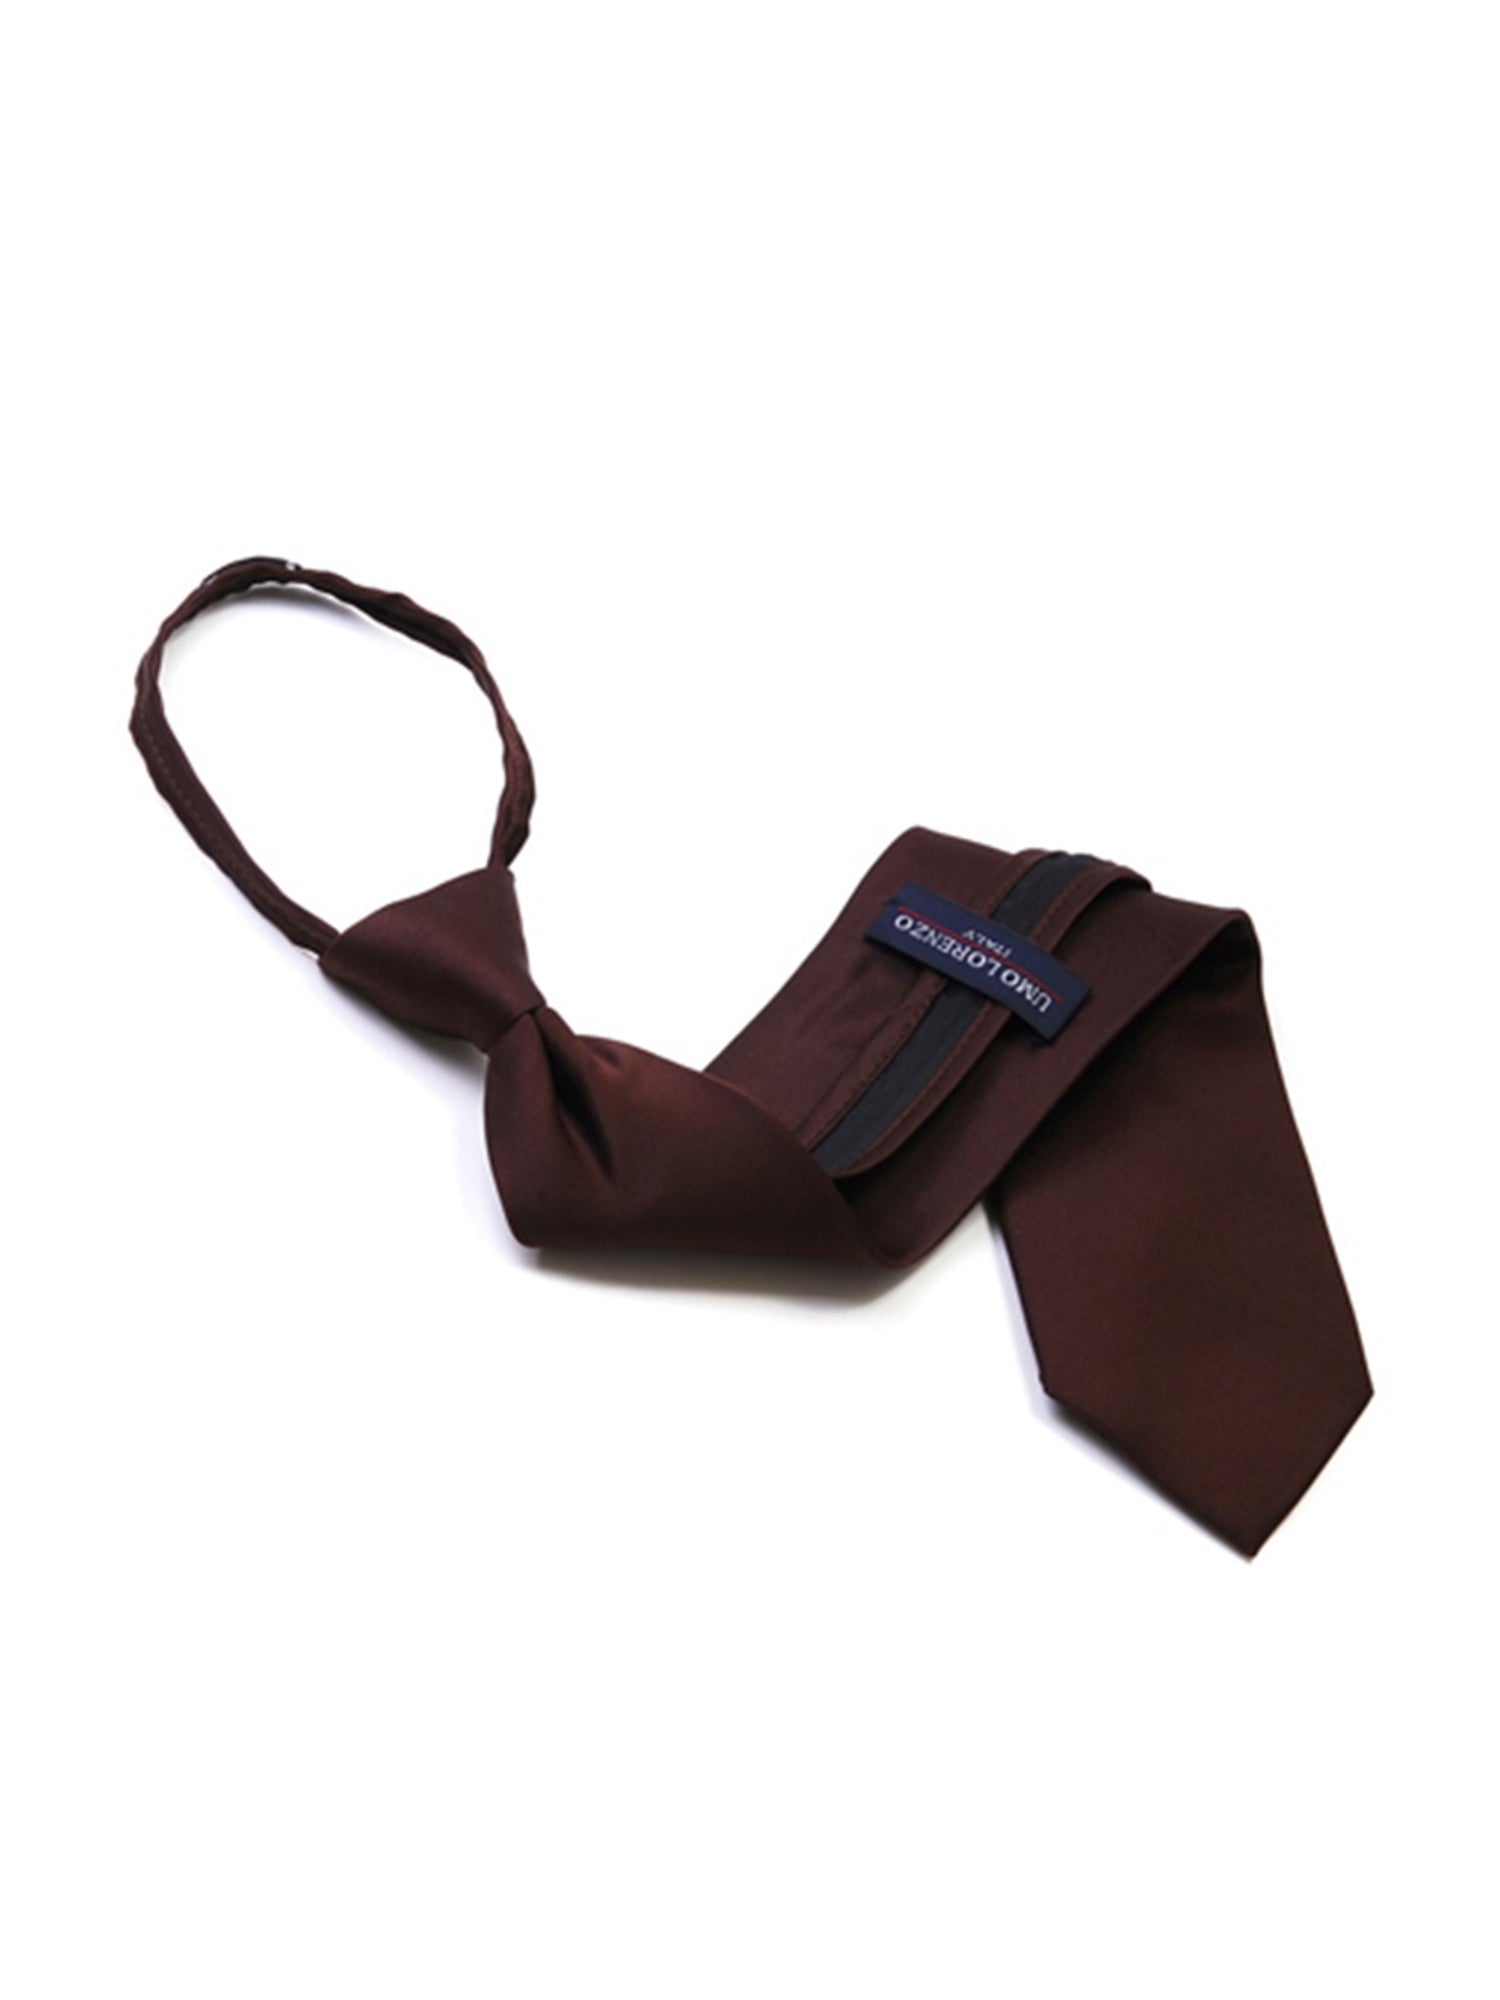 Men's Solid Color Pre-tied Zipper Neck Tie Dapper Neckwear TheDapperTie Brown One Size 